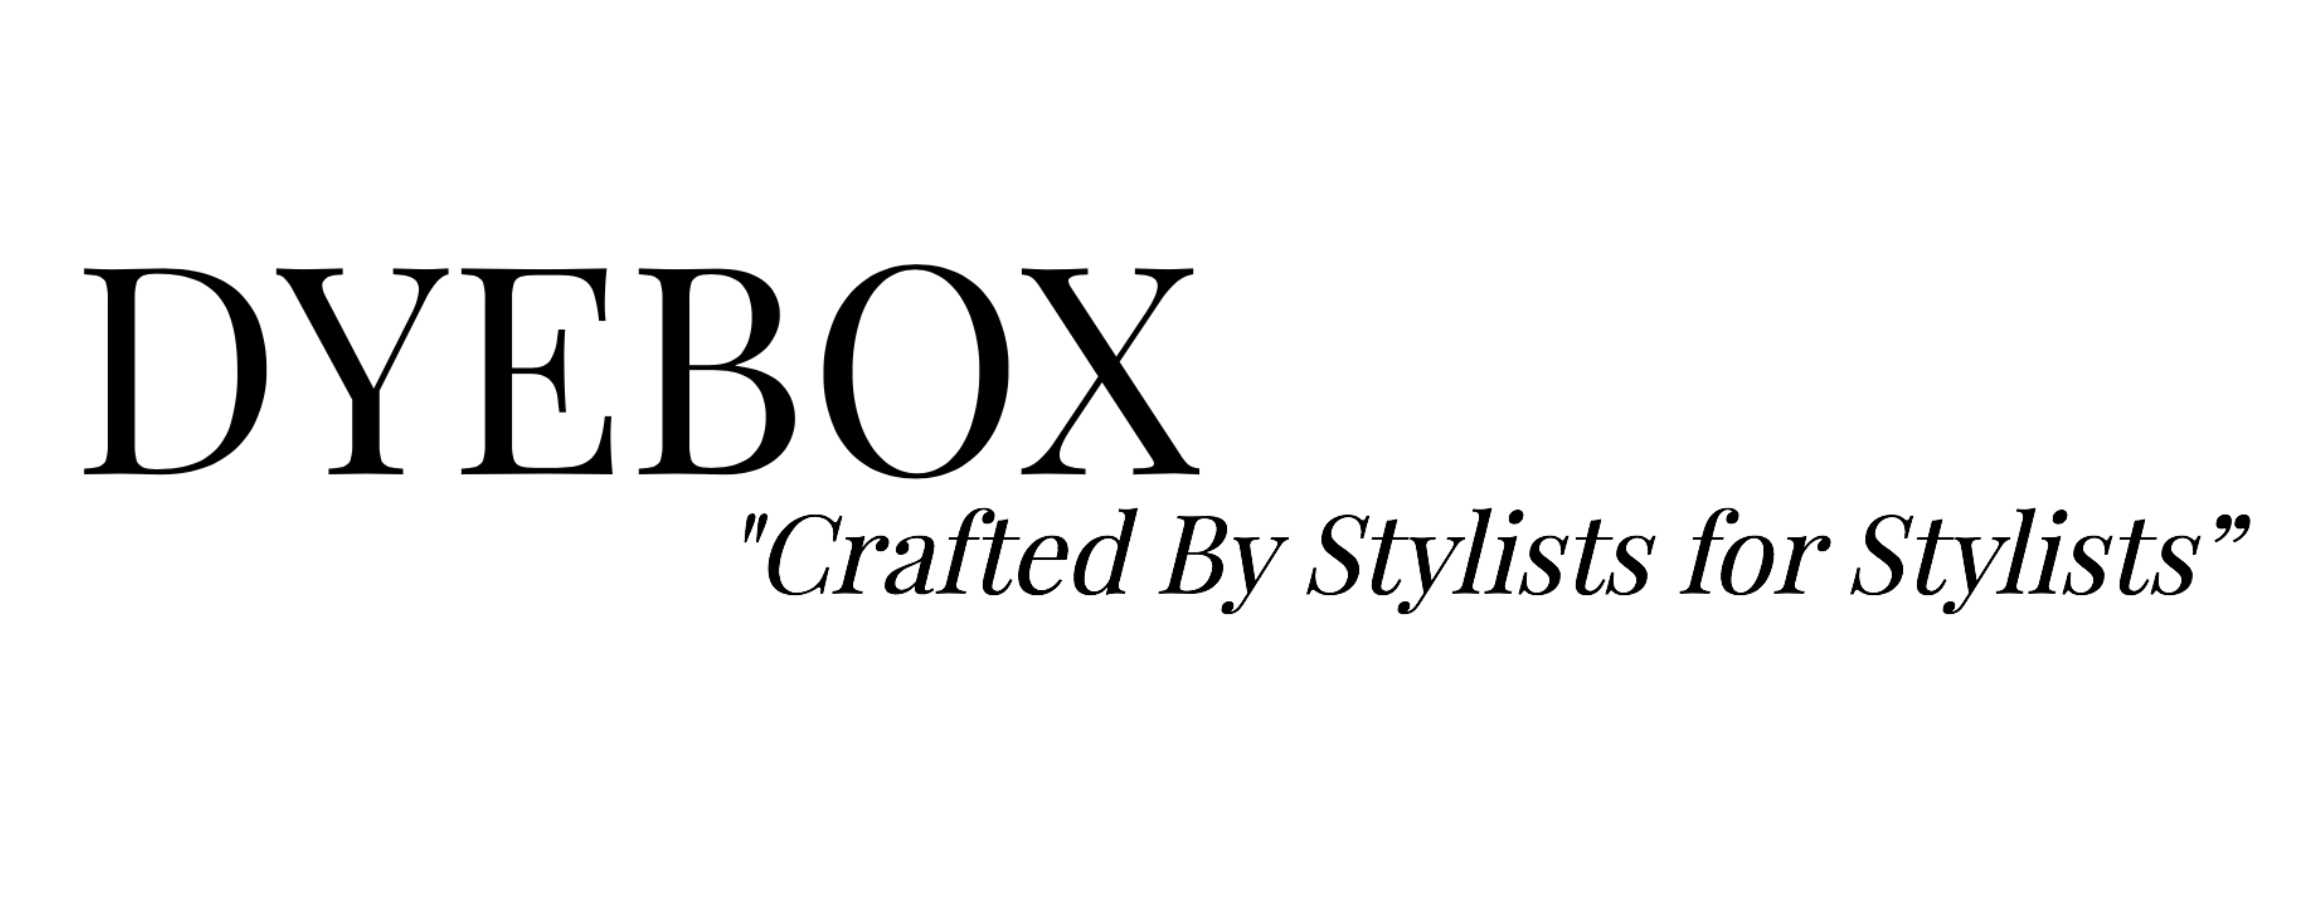 dyebox logo jpg.png